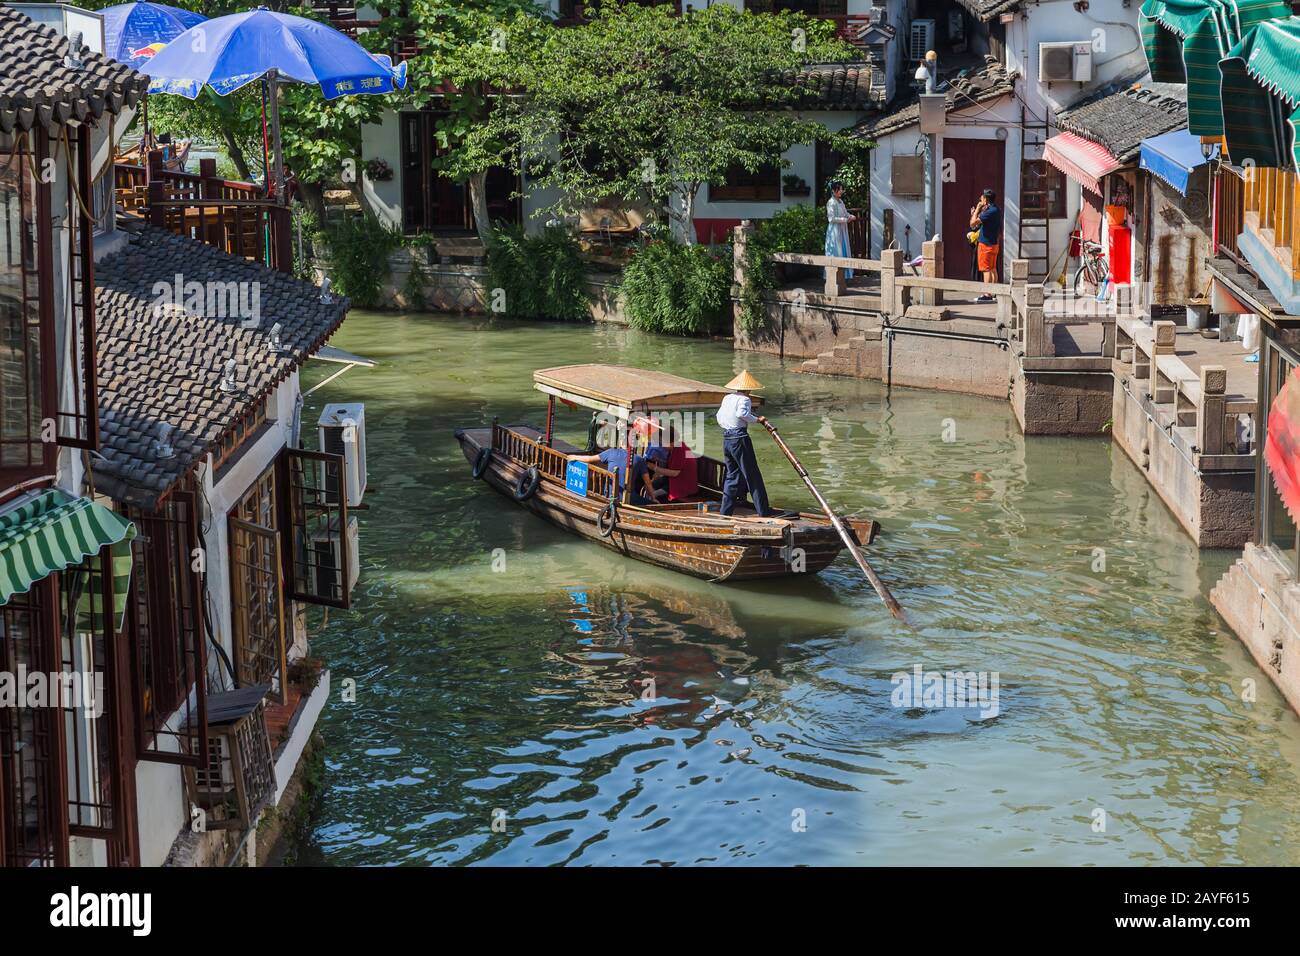 Shanghai, China - May 23, 2018: Boat cruise on the canal in Zhujiajiao water town Stock Photo